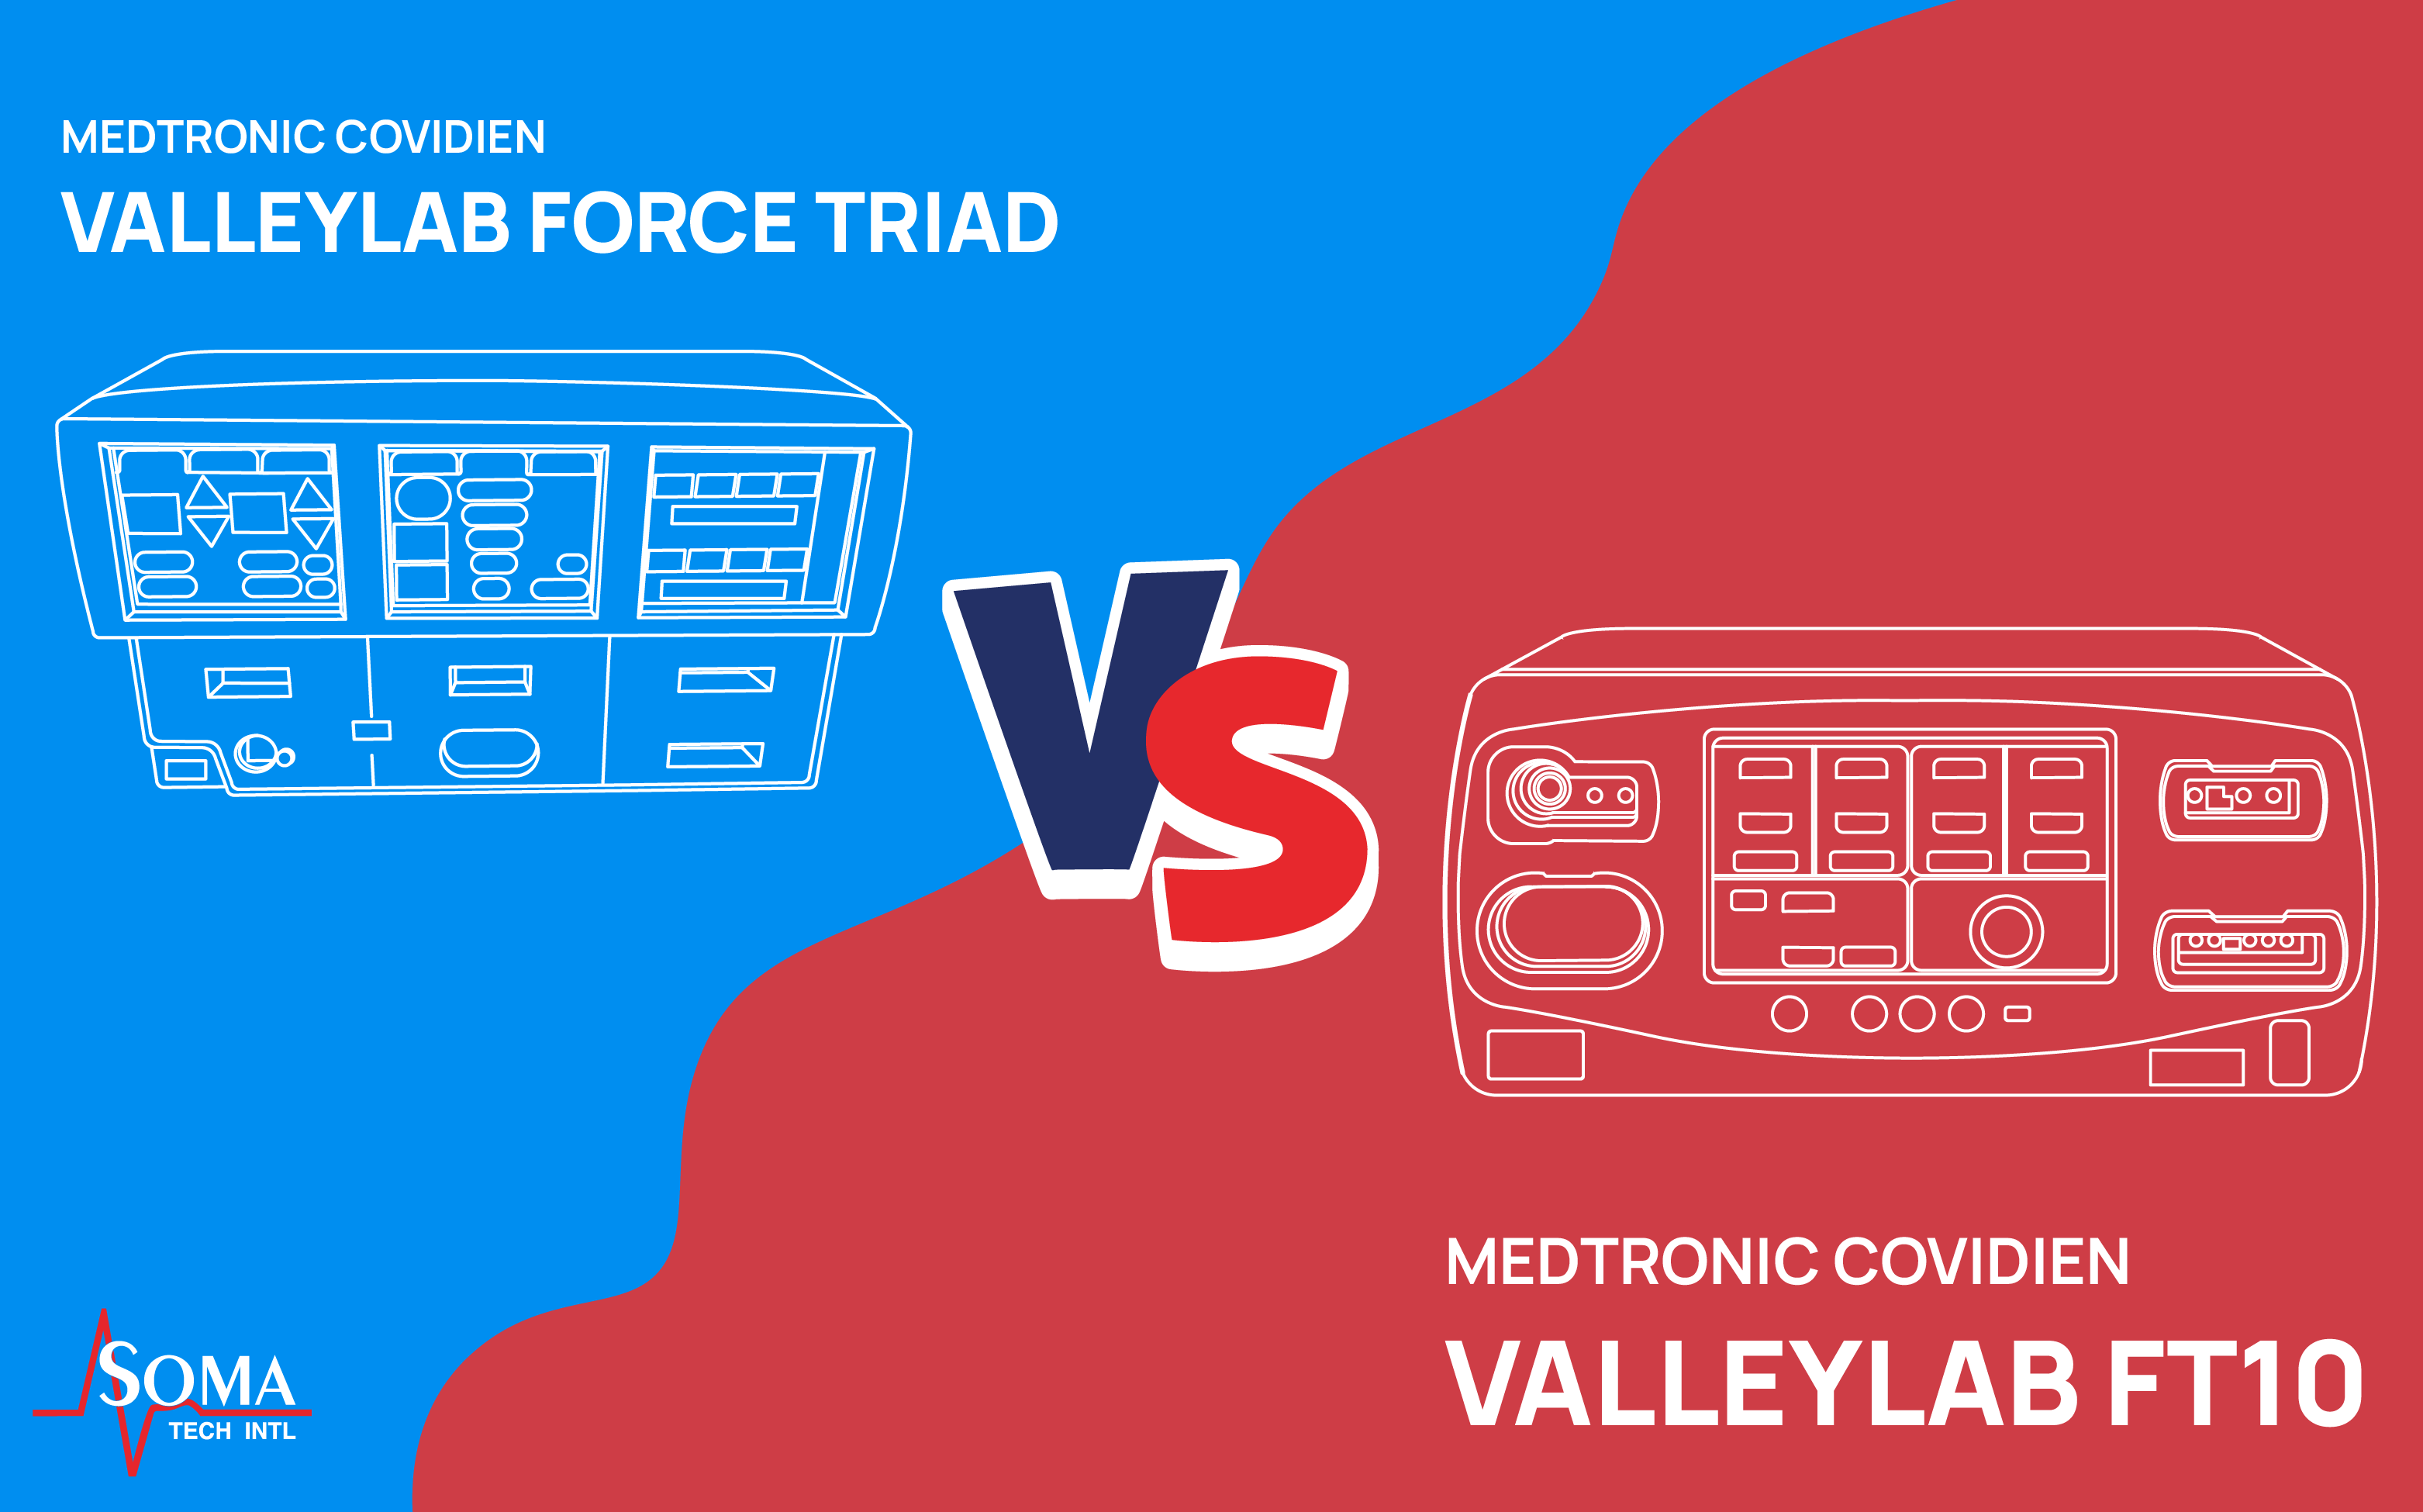 Medtronic Covidien ESU Compairison Valleylab FT10 vs Valleylab Force Triad